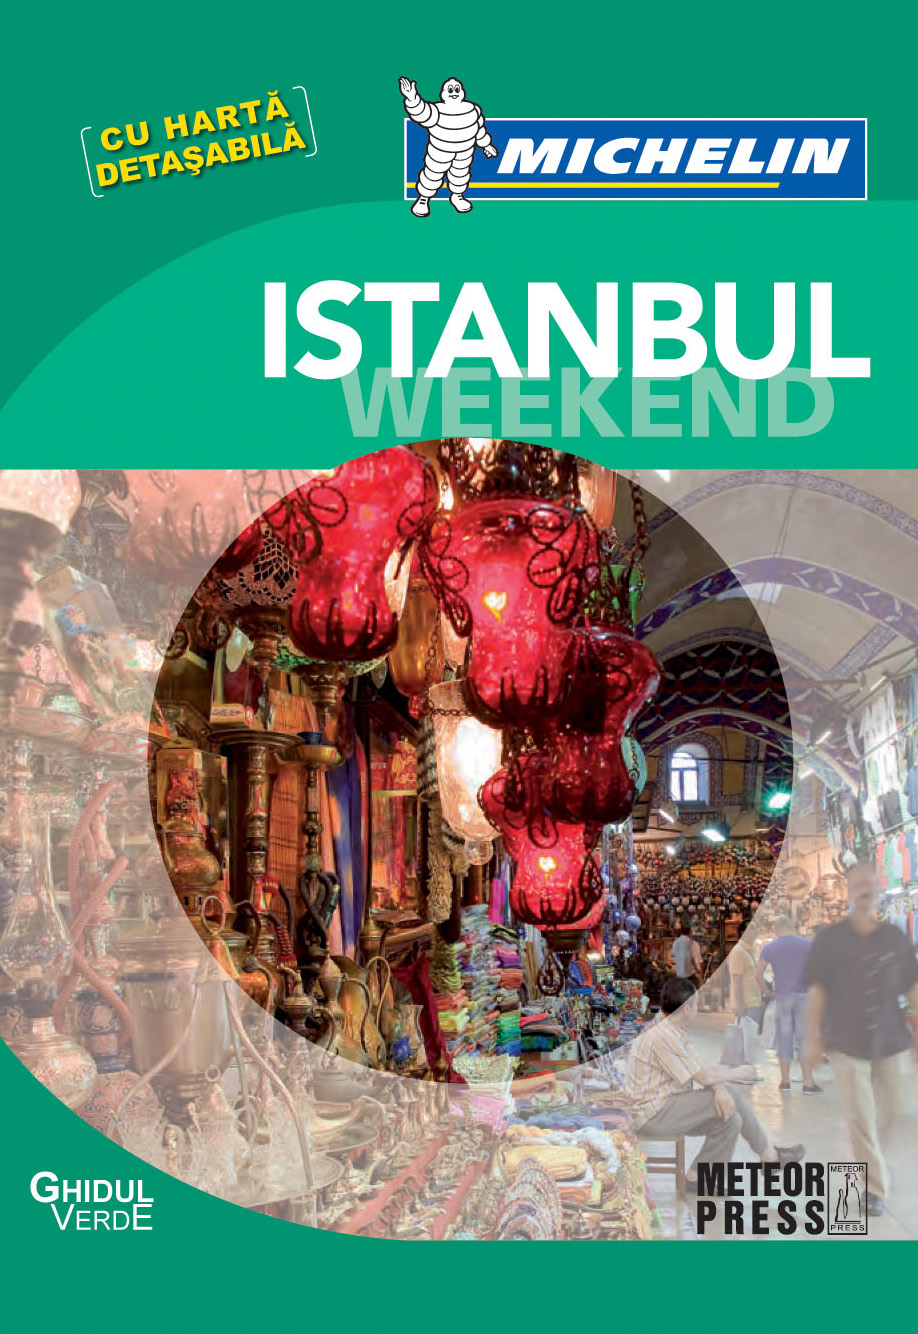 Ghidul Michelin Istanbul Weekend